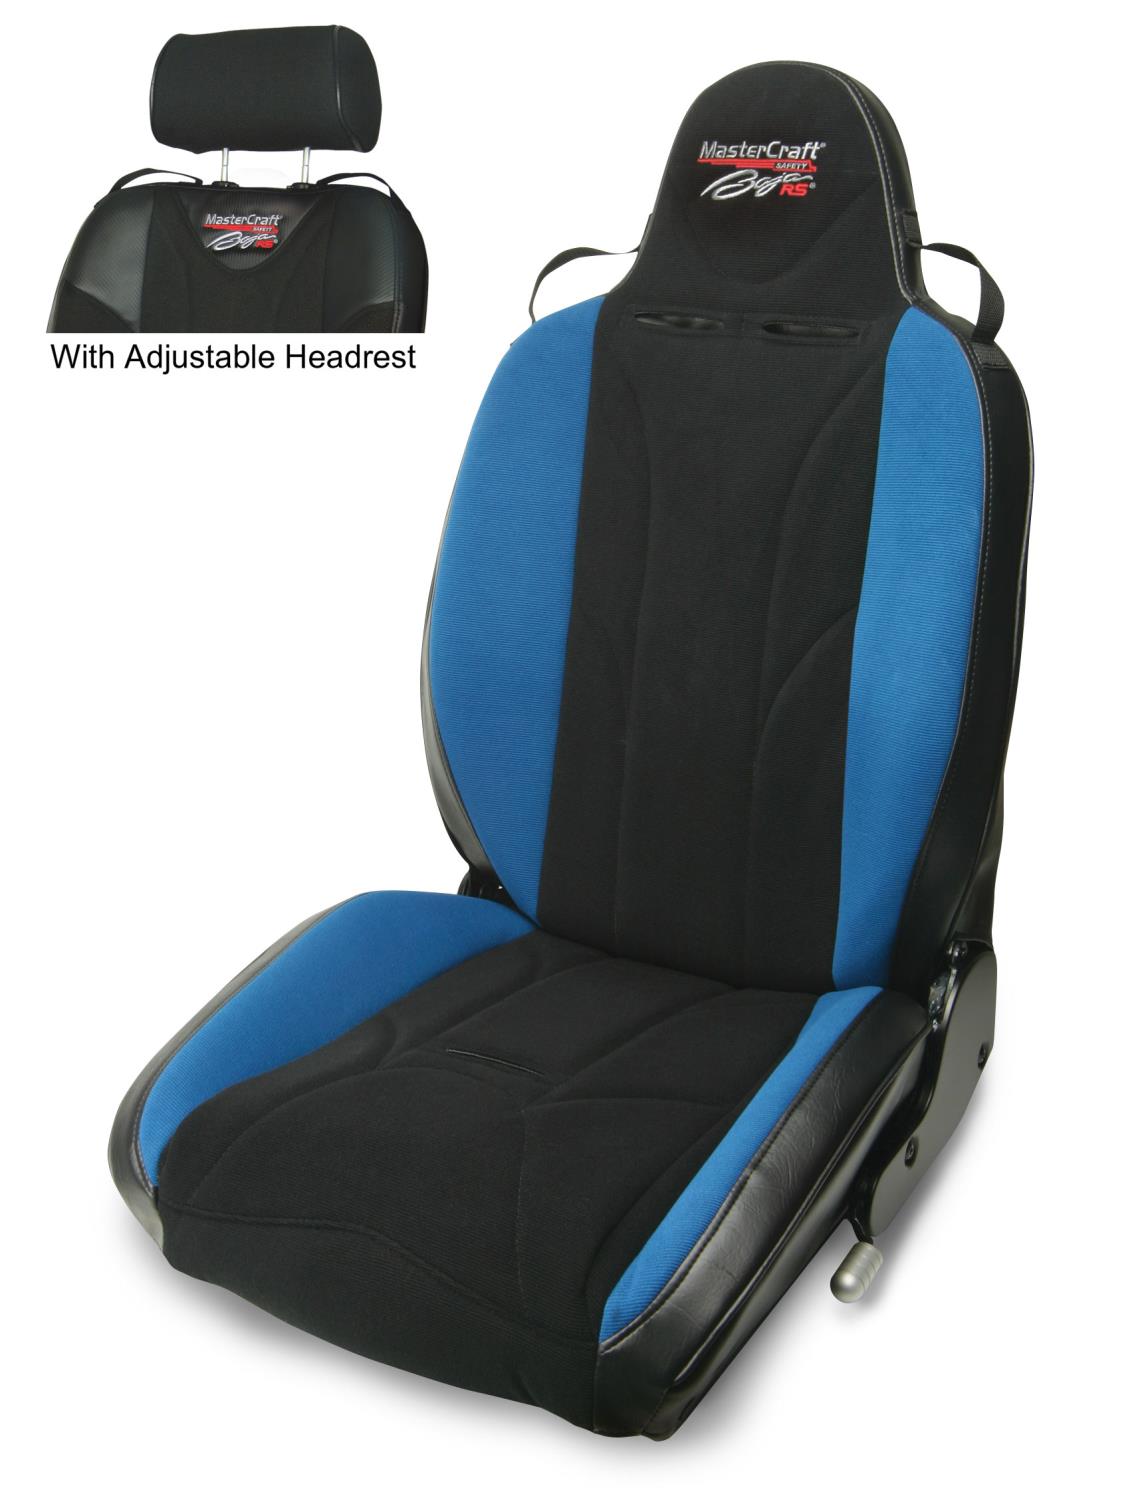 512023 MasterCraft Baja RS w/Adj. Headrest, Black w/Black Center & Blue Side Panels, Recliner Lever Left, w/BRS Stitch Pattern